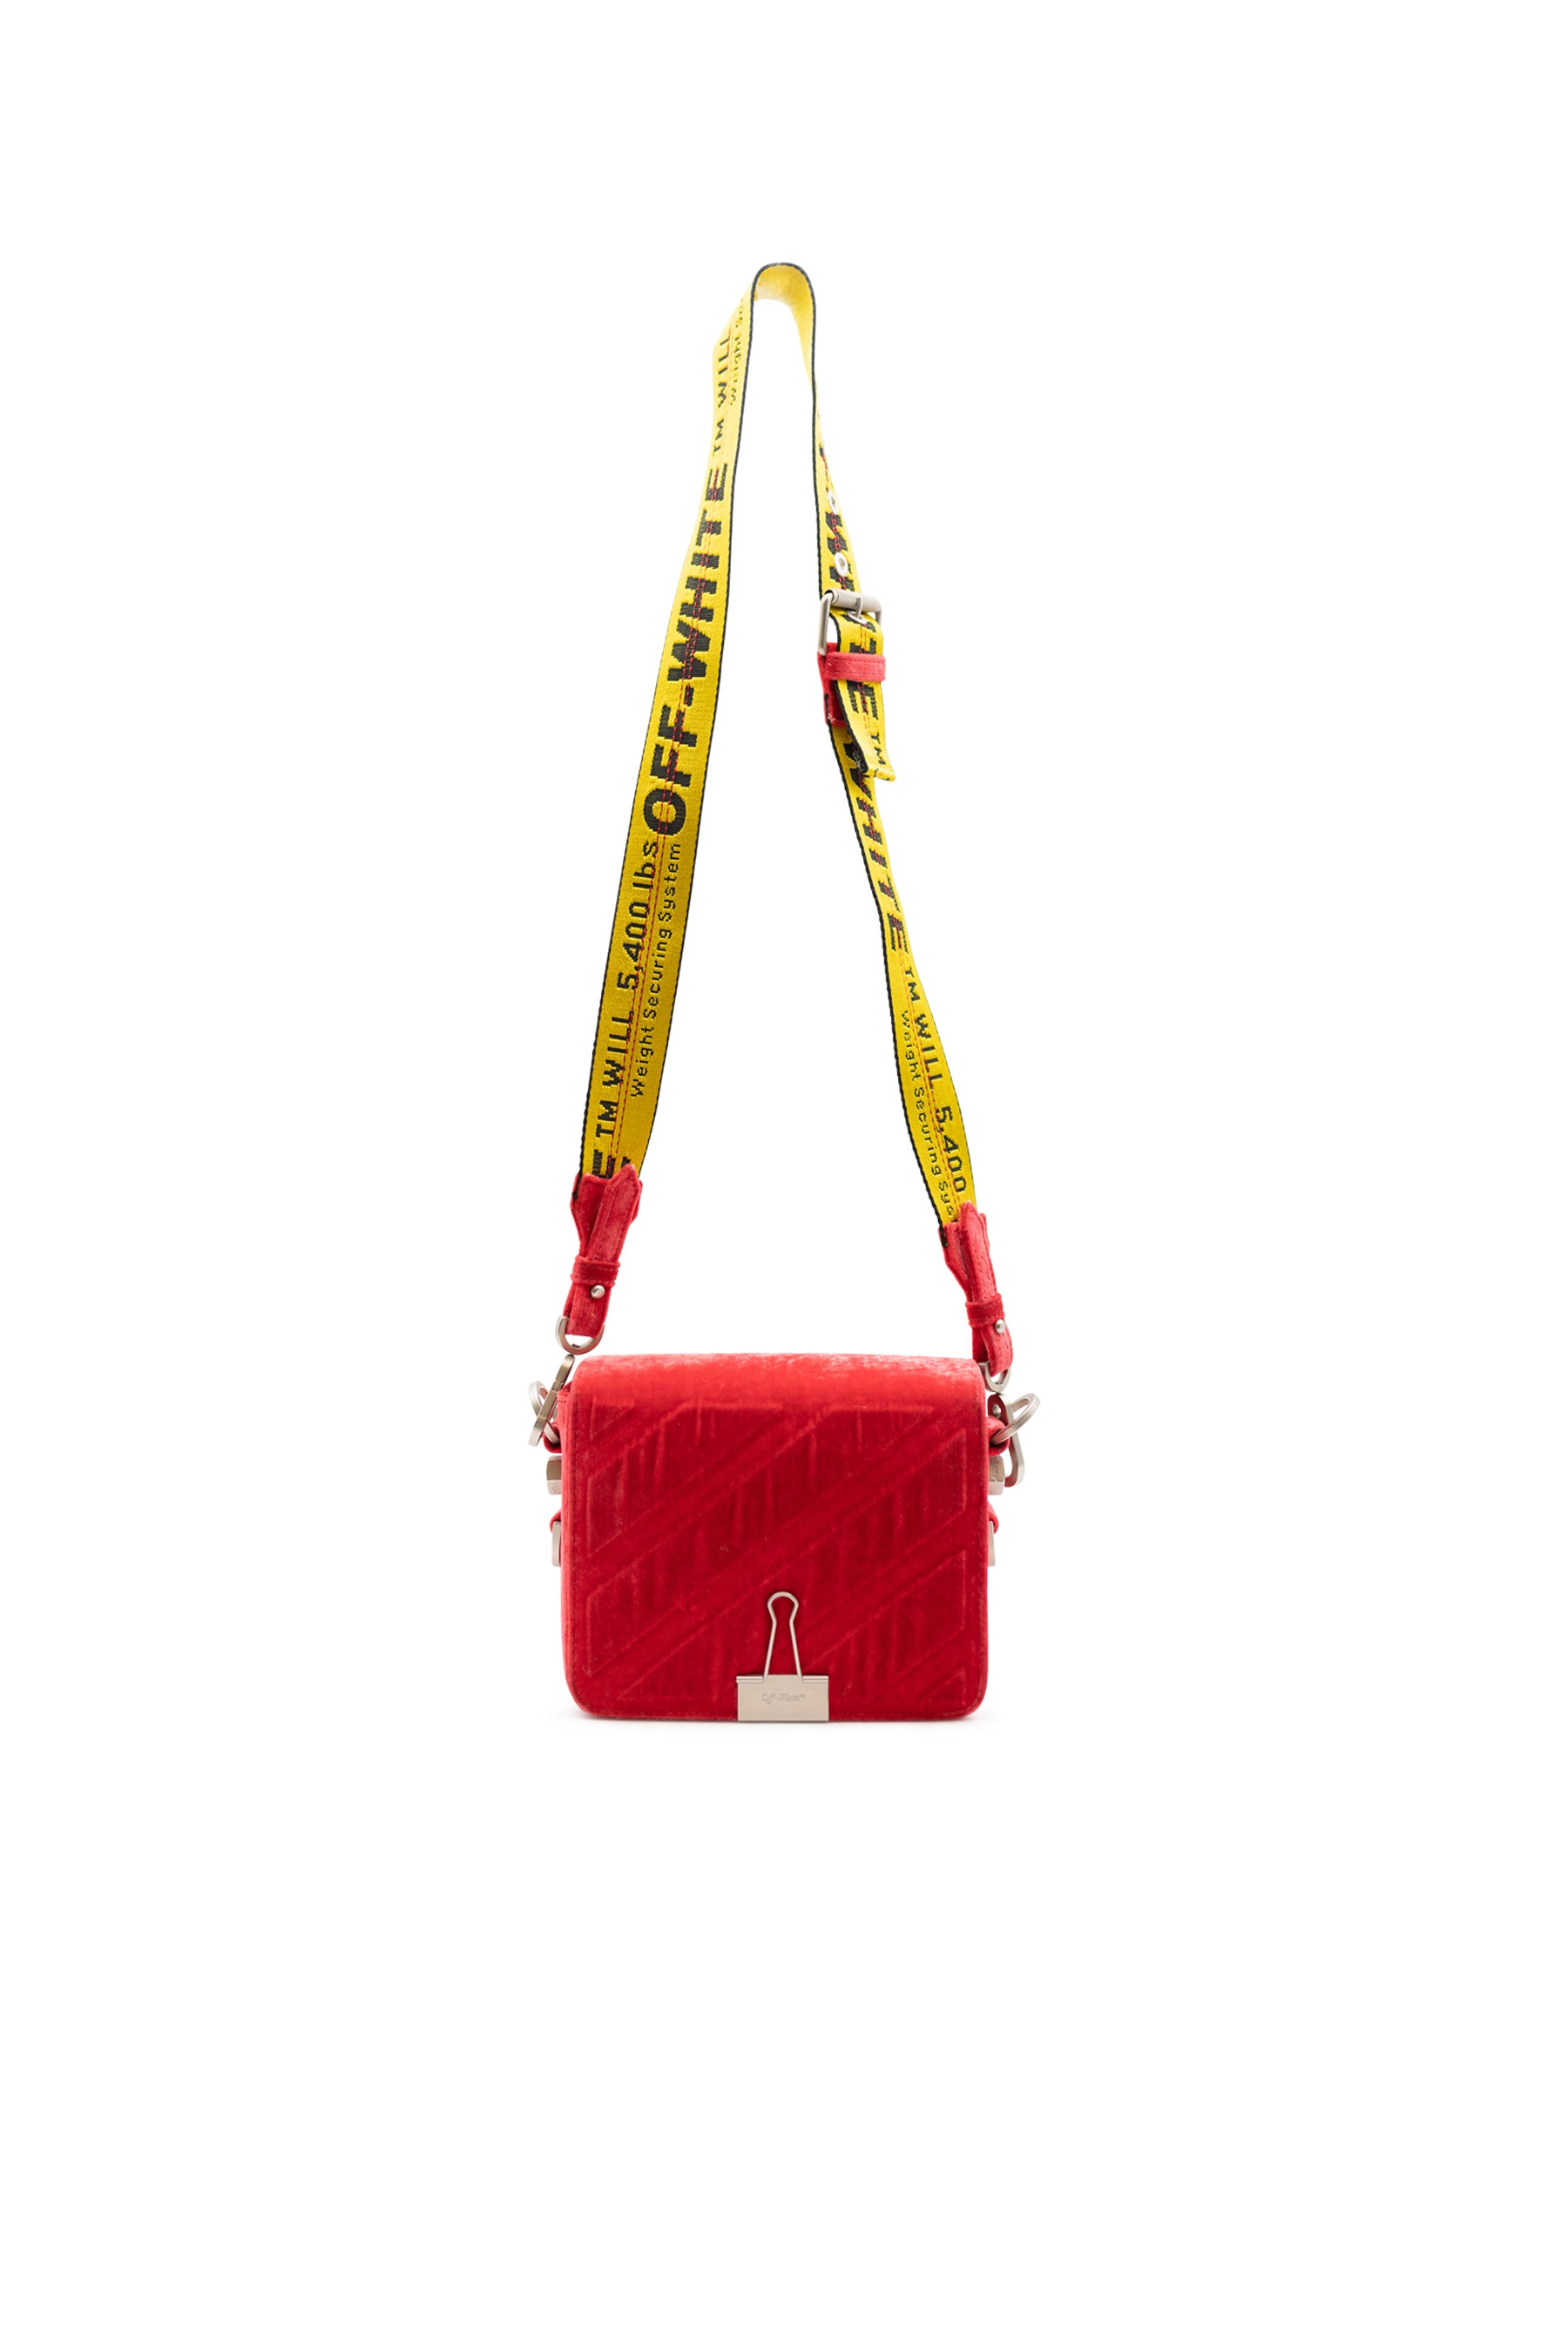 Off White and Khaki Zebra Print GOLD CLIPS Handbag Straps, Detachable Bag  Strap, Crossbody Long Strap, Clip on Bag Strap 